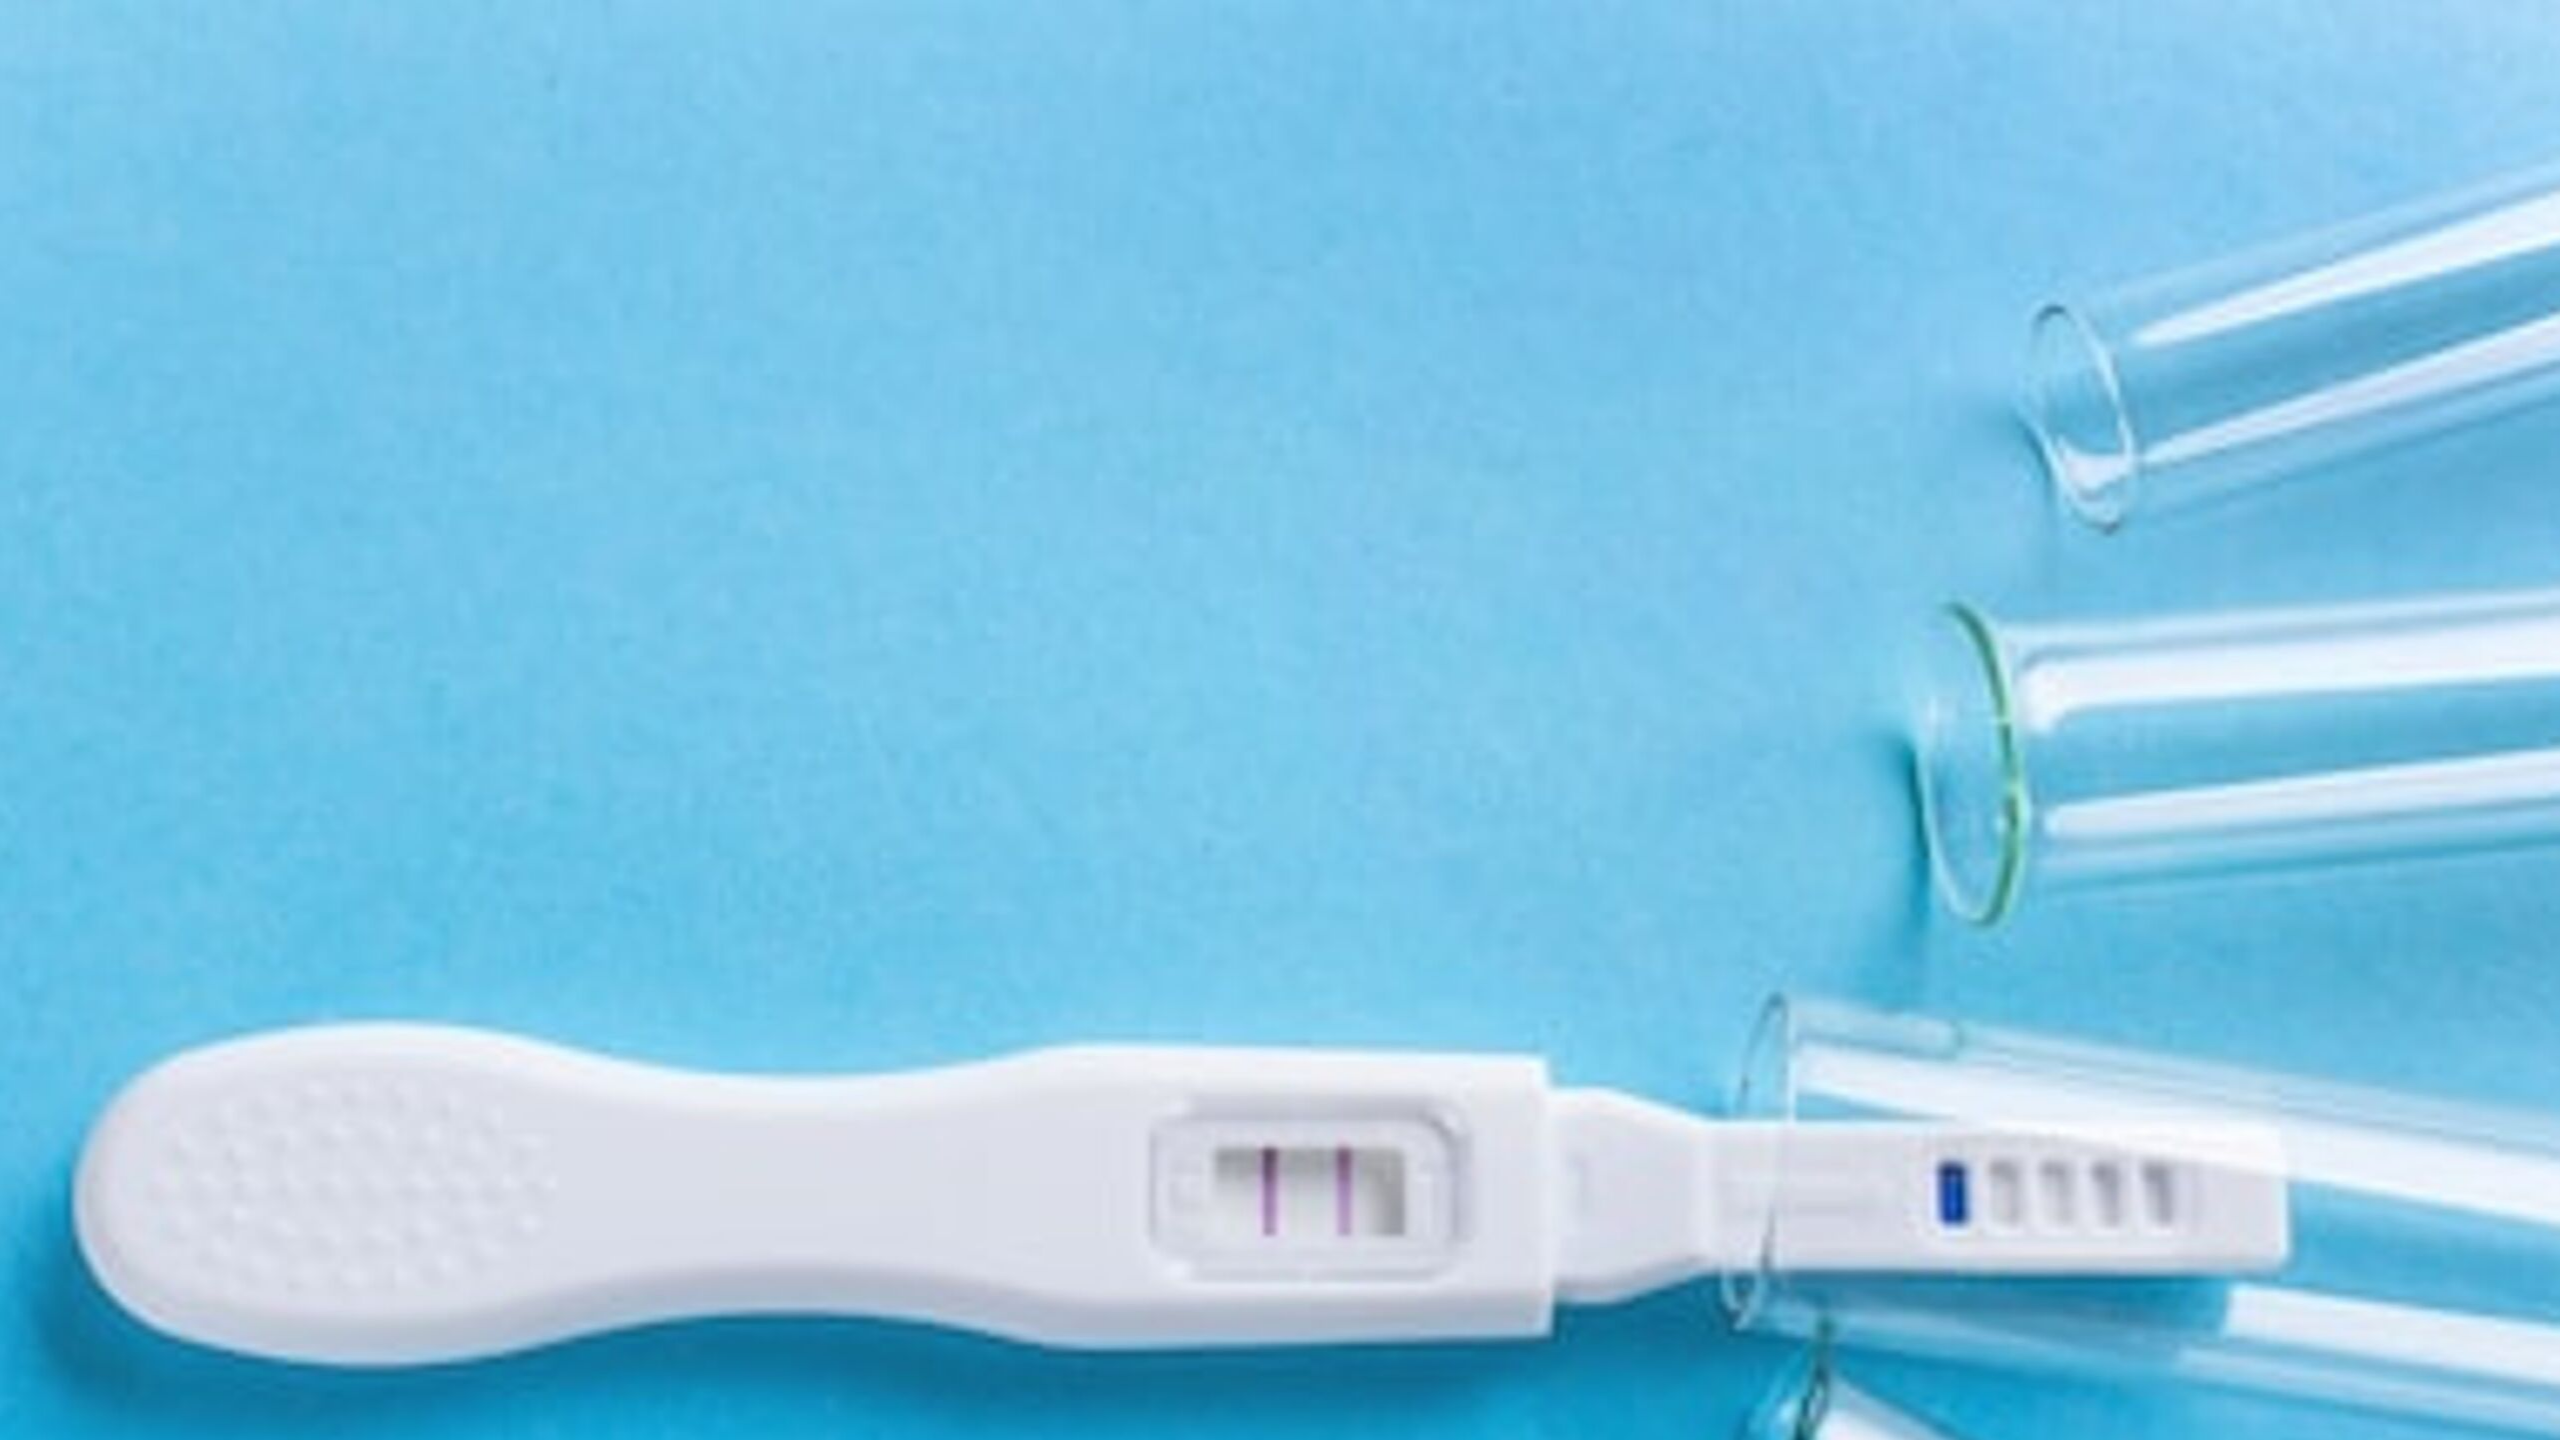 IVF pregnancy tests